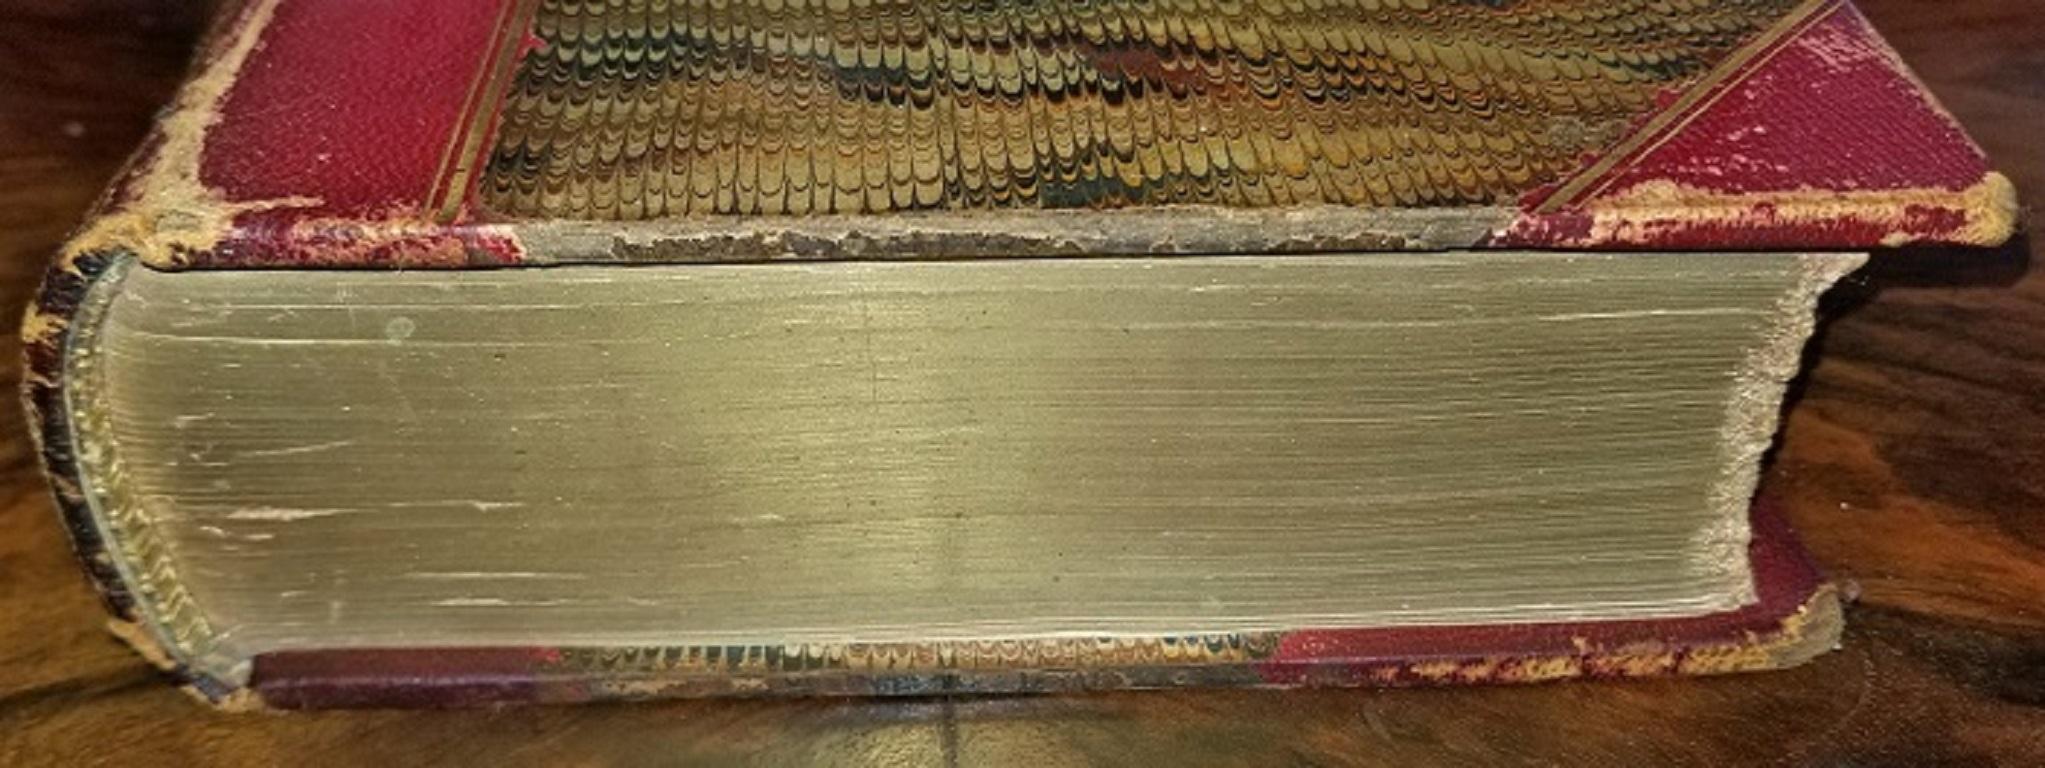 19th Century Bibliomania or Book Madness by Thomas Frognall Dibdin, 1842 For Sale